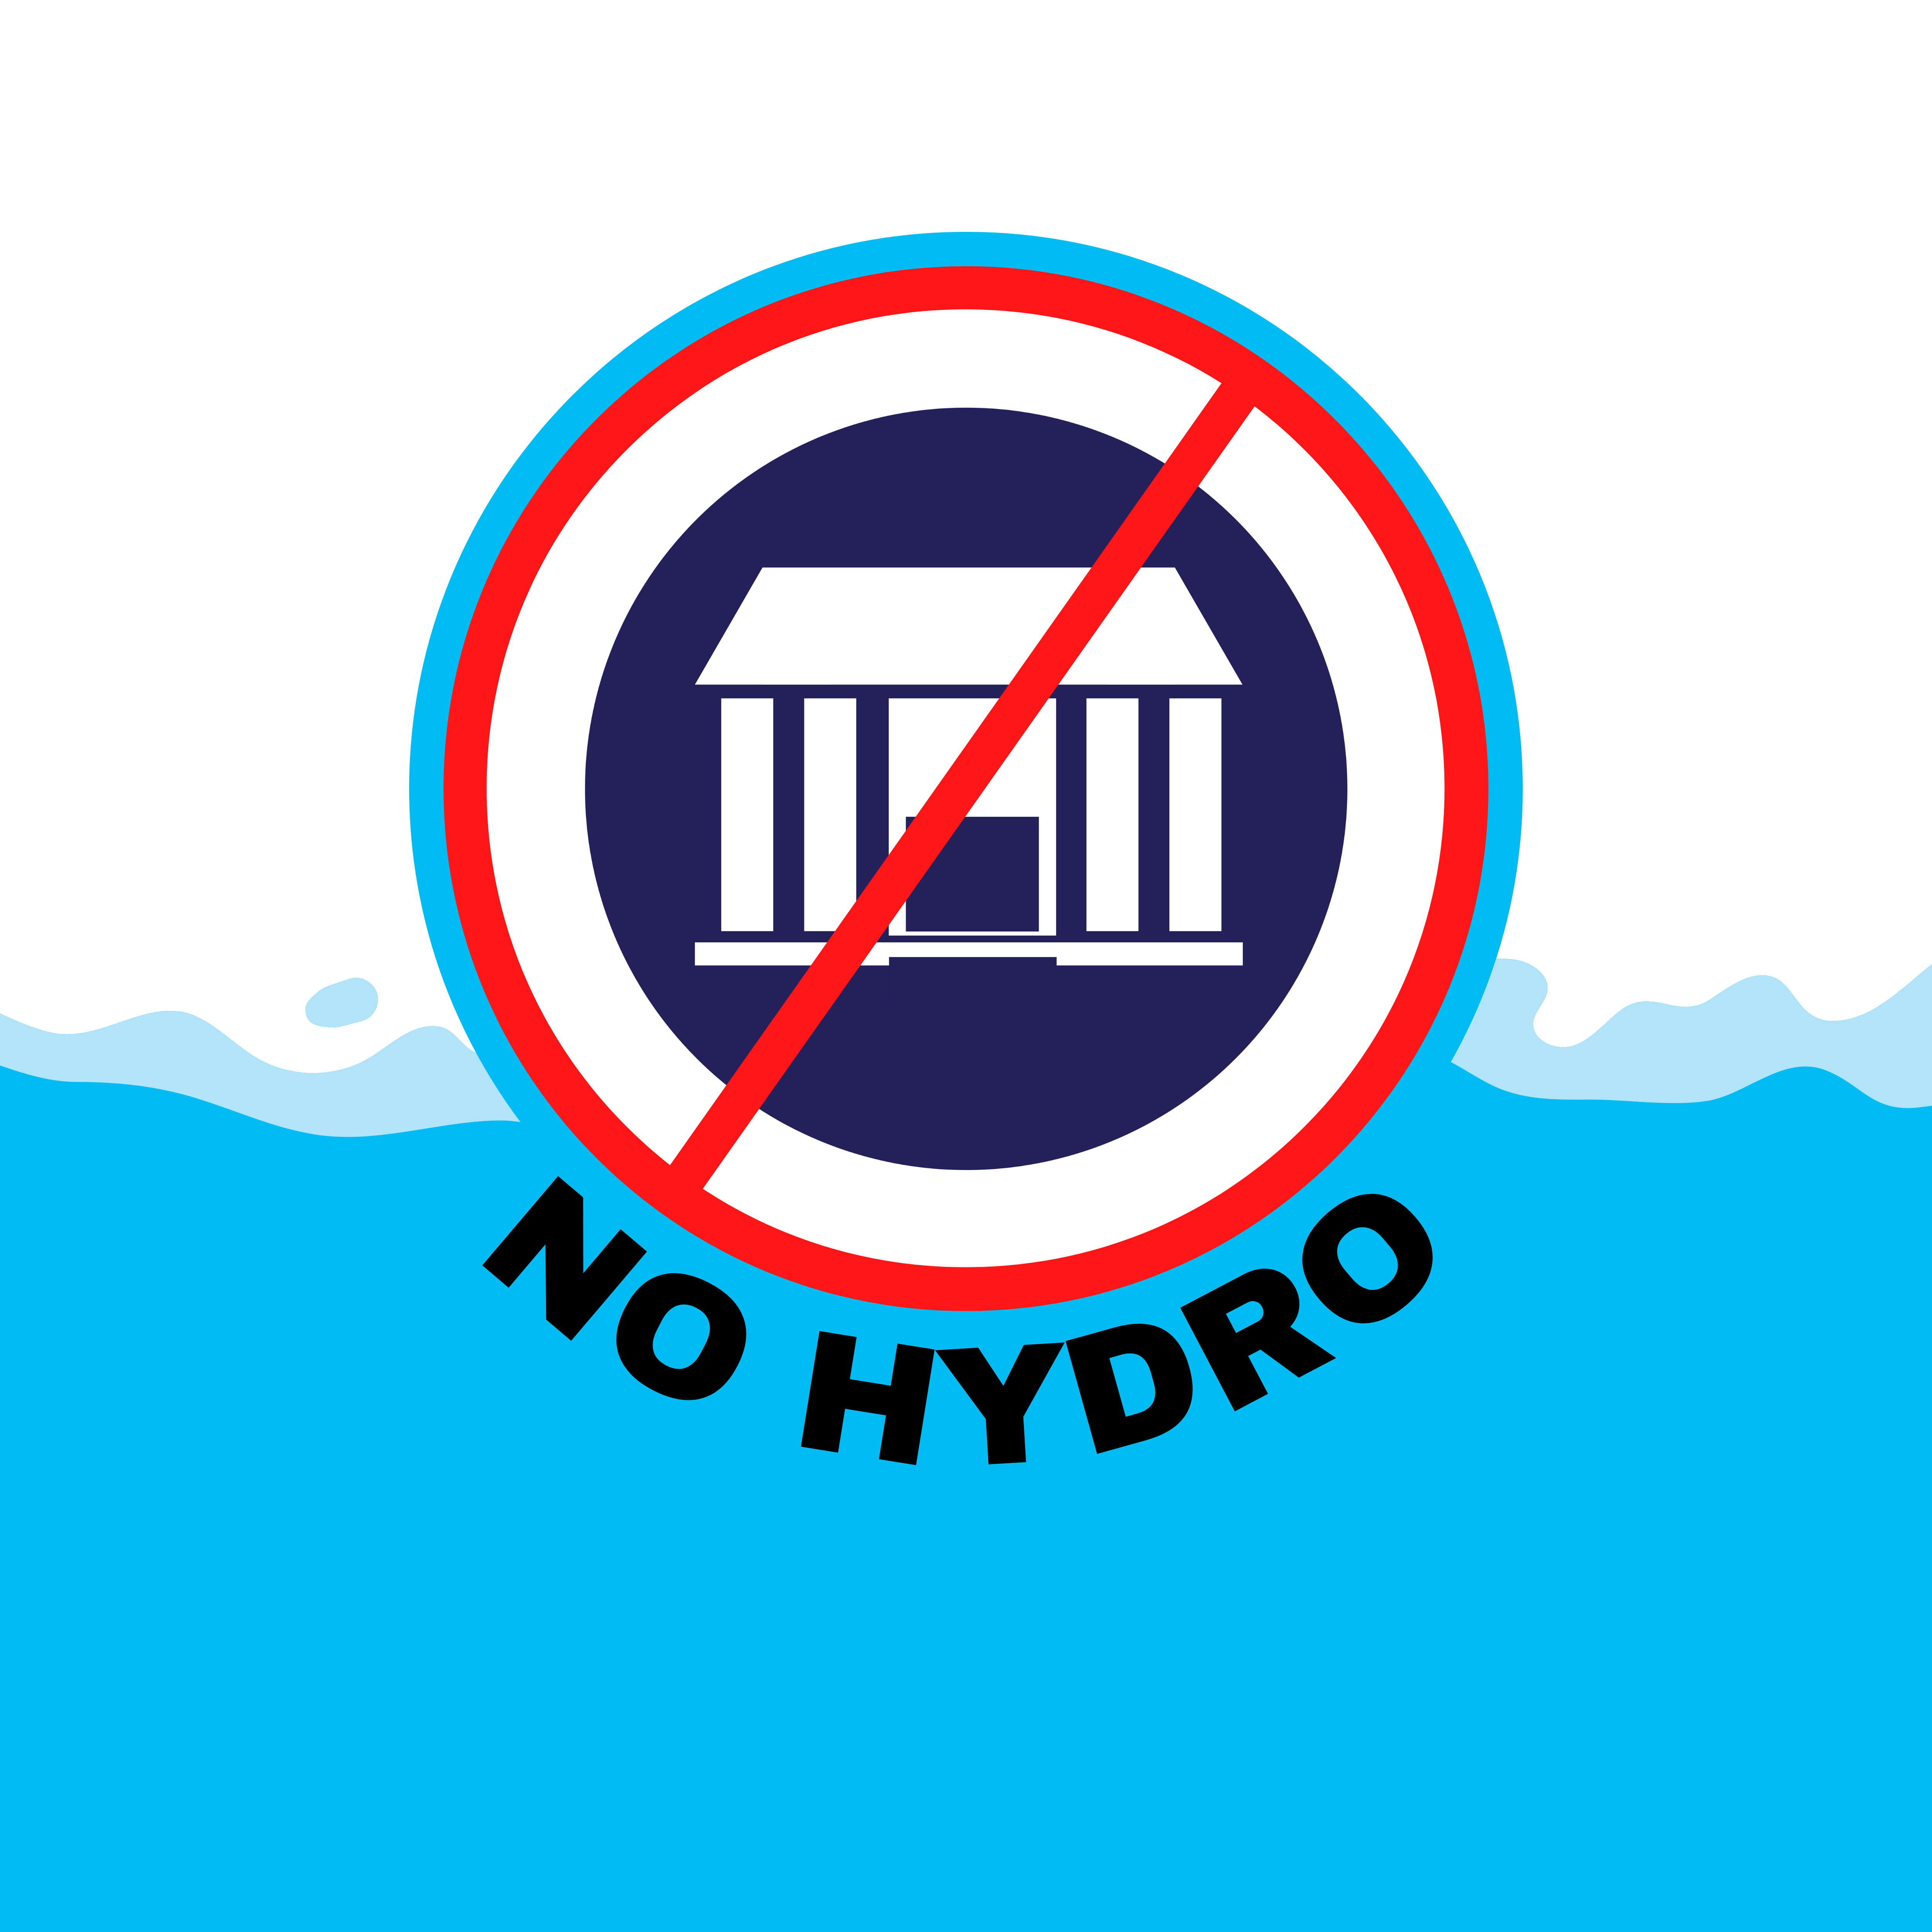 Company No Hydro. Description and contact information.